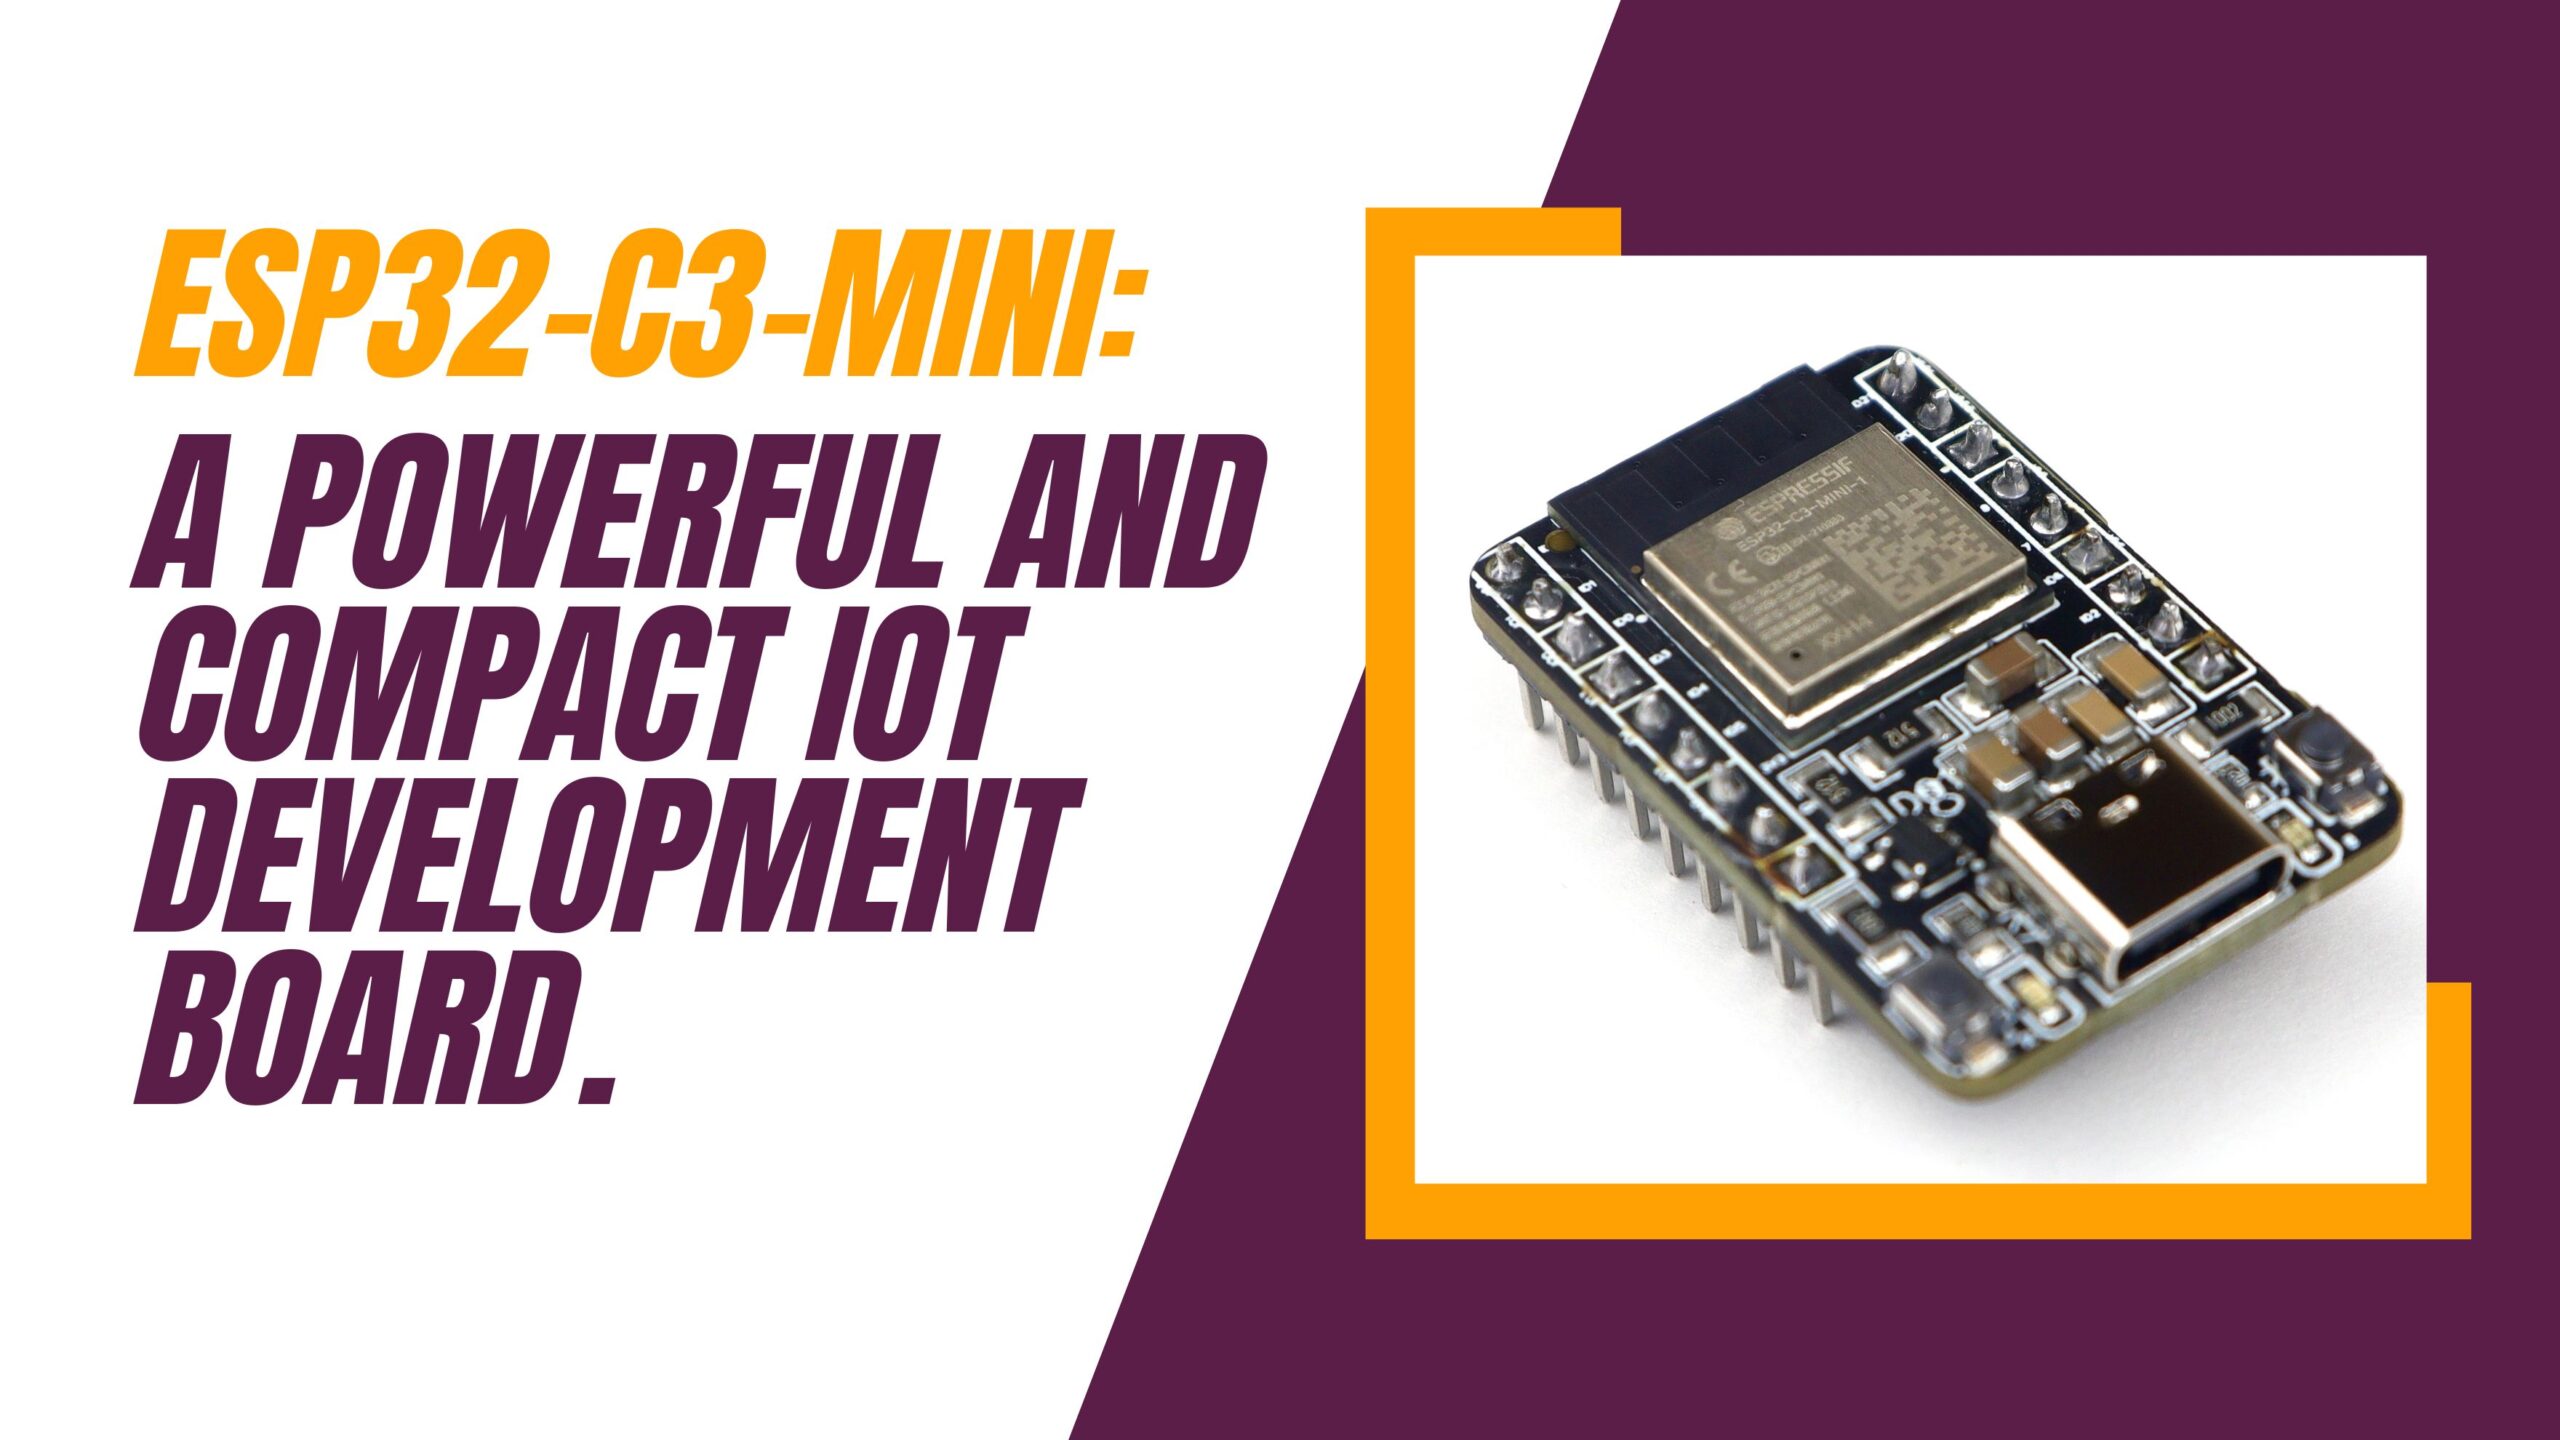 ESP32-C3-MINI: A Powerful and Compact IoT Development Board.